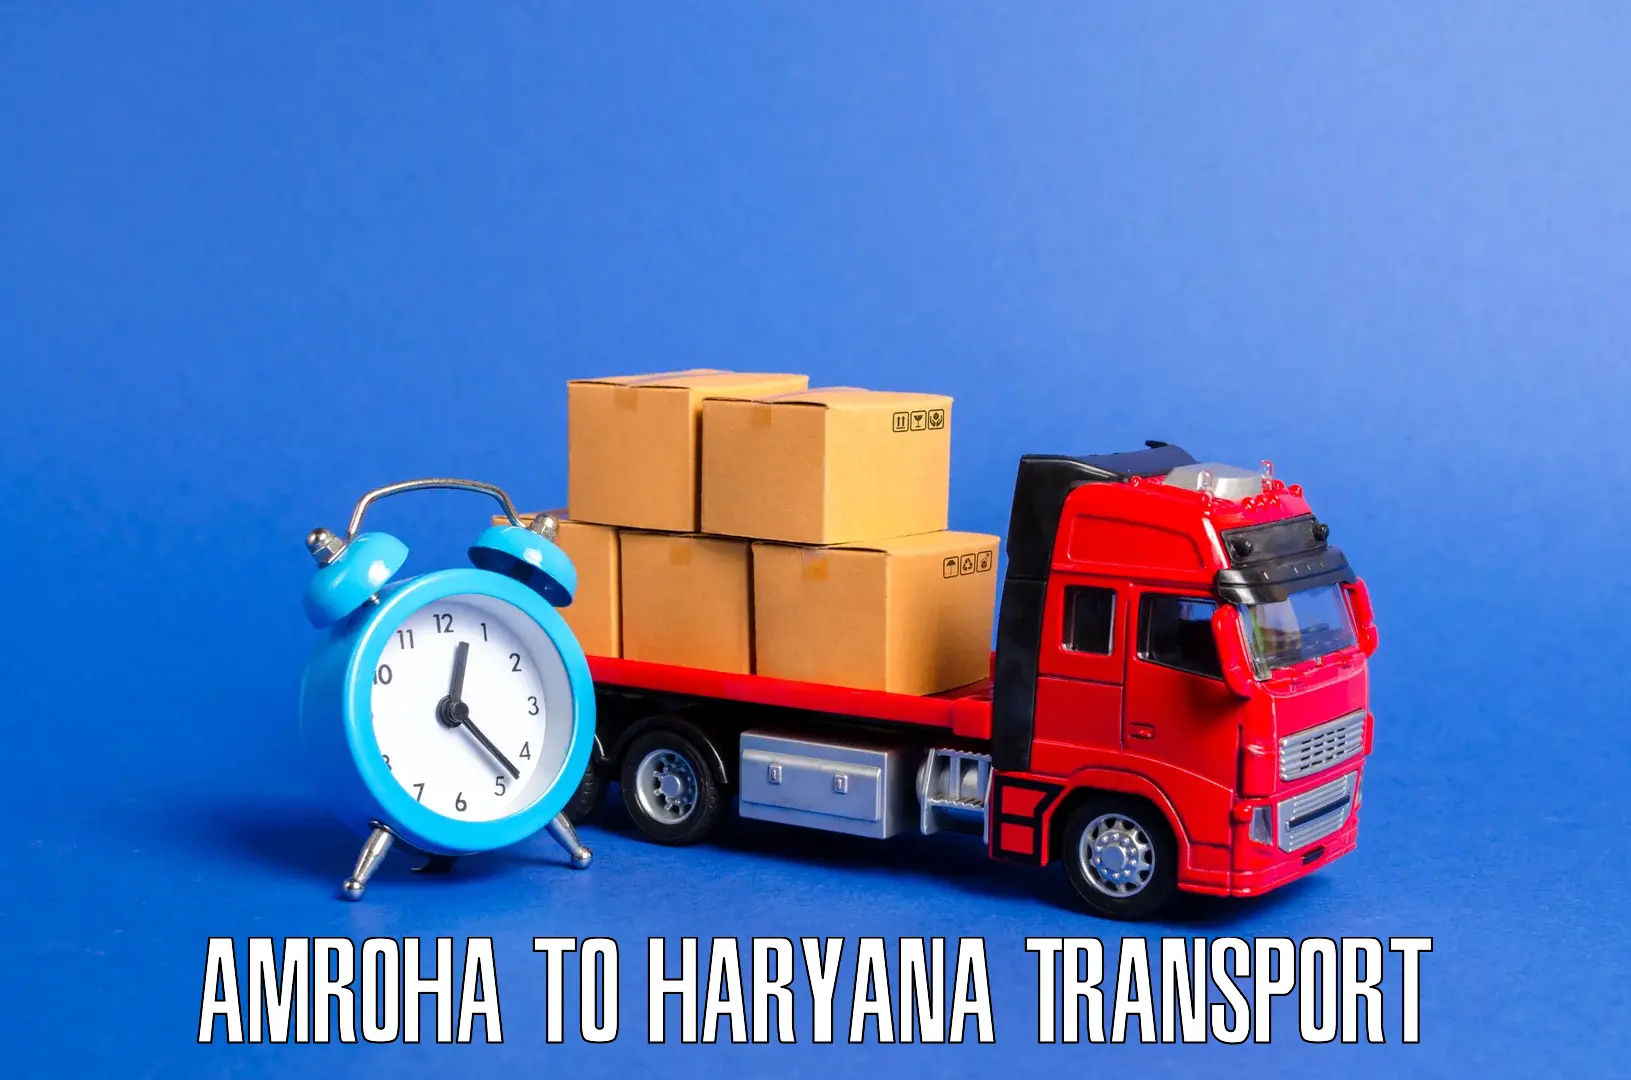 Nearby transport service Amroha to Gurgaon